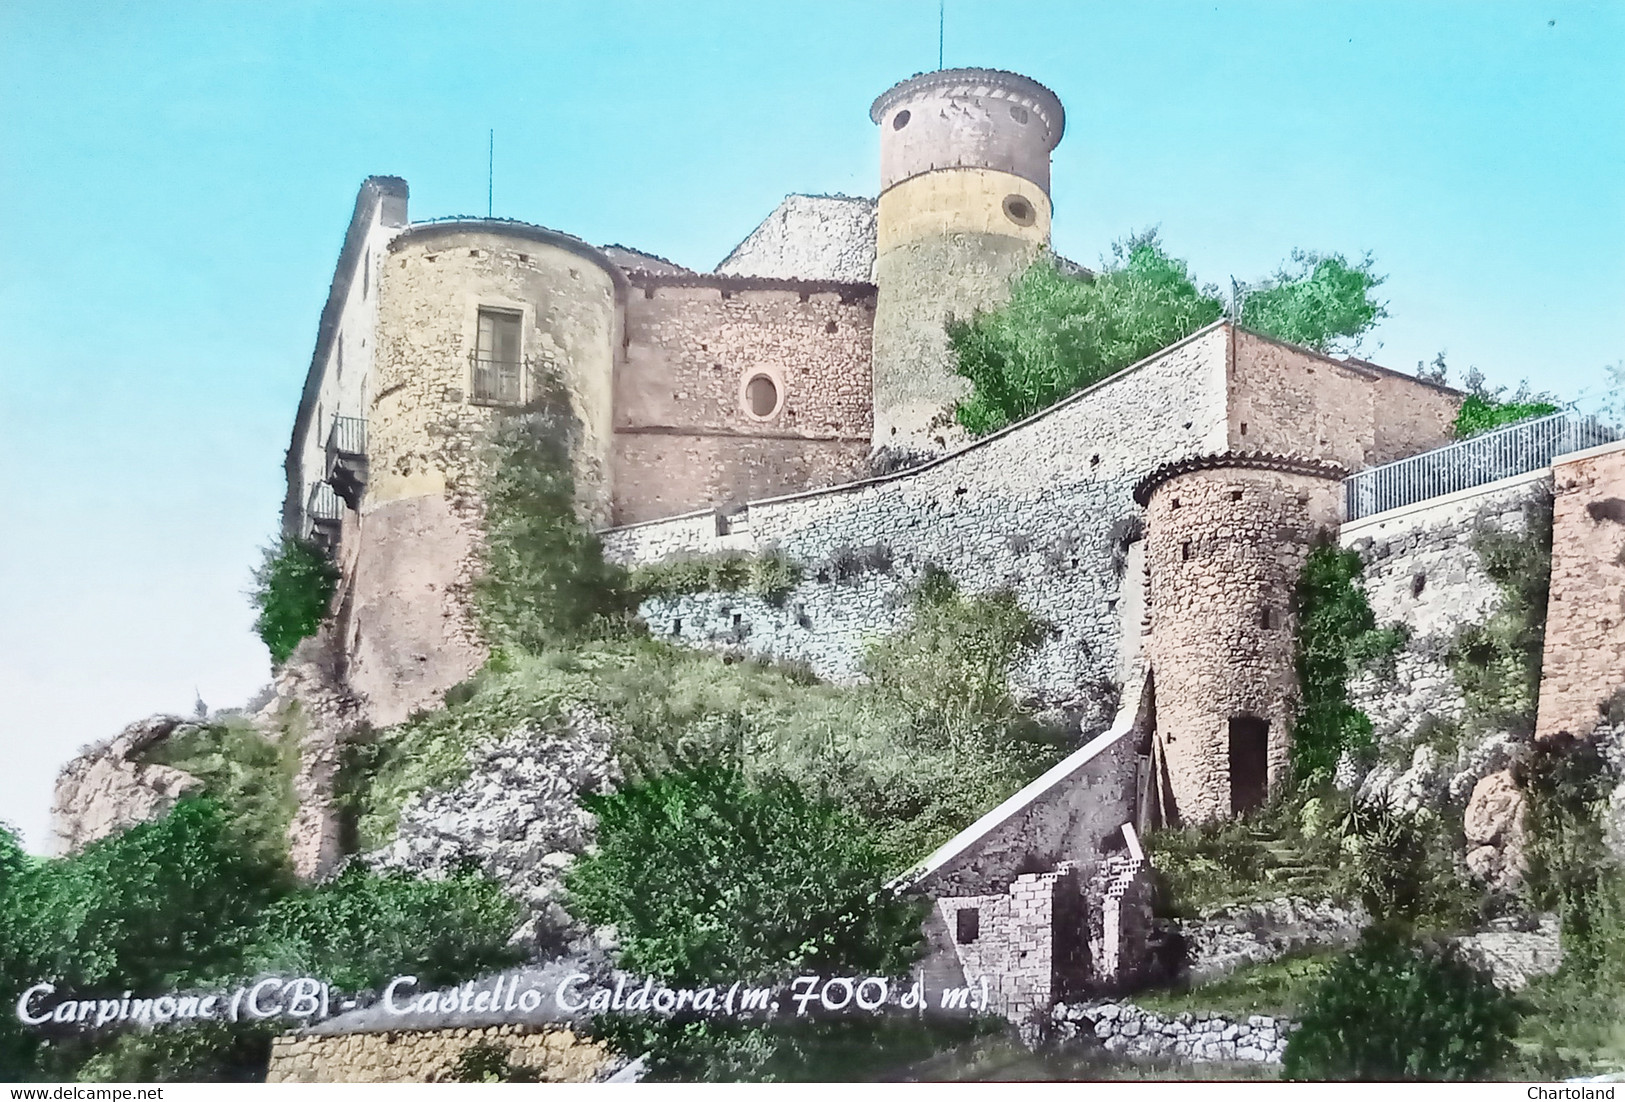 Cartolina - Carpinone - Castello Caldora - 1967 - Isernia